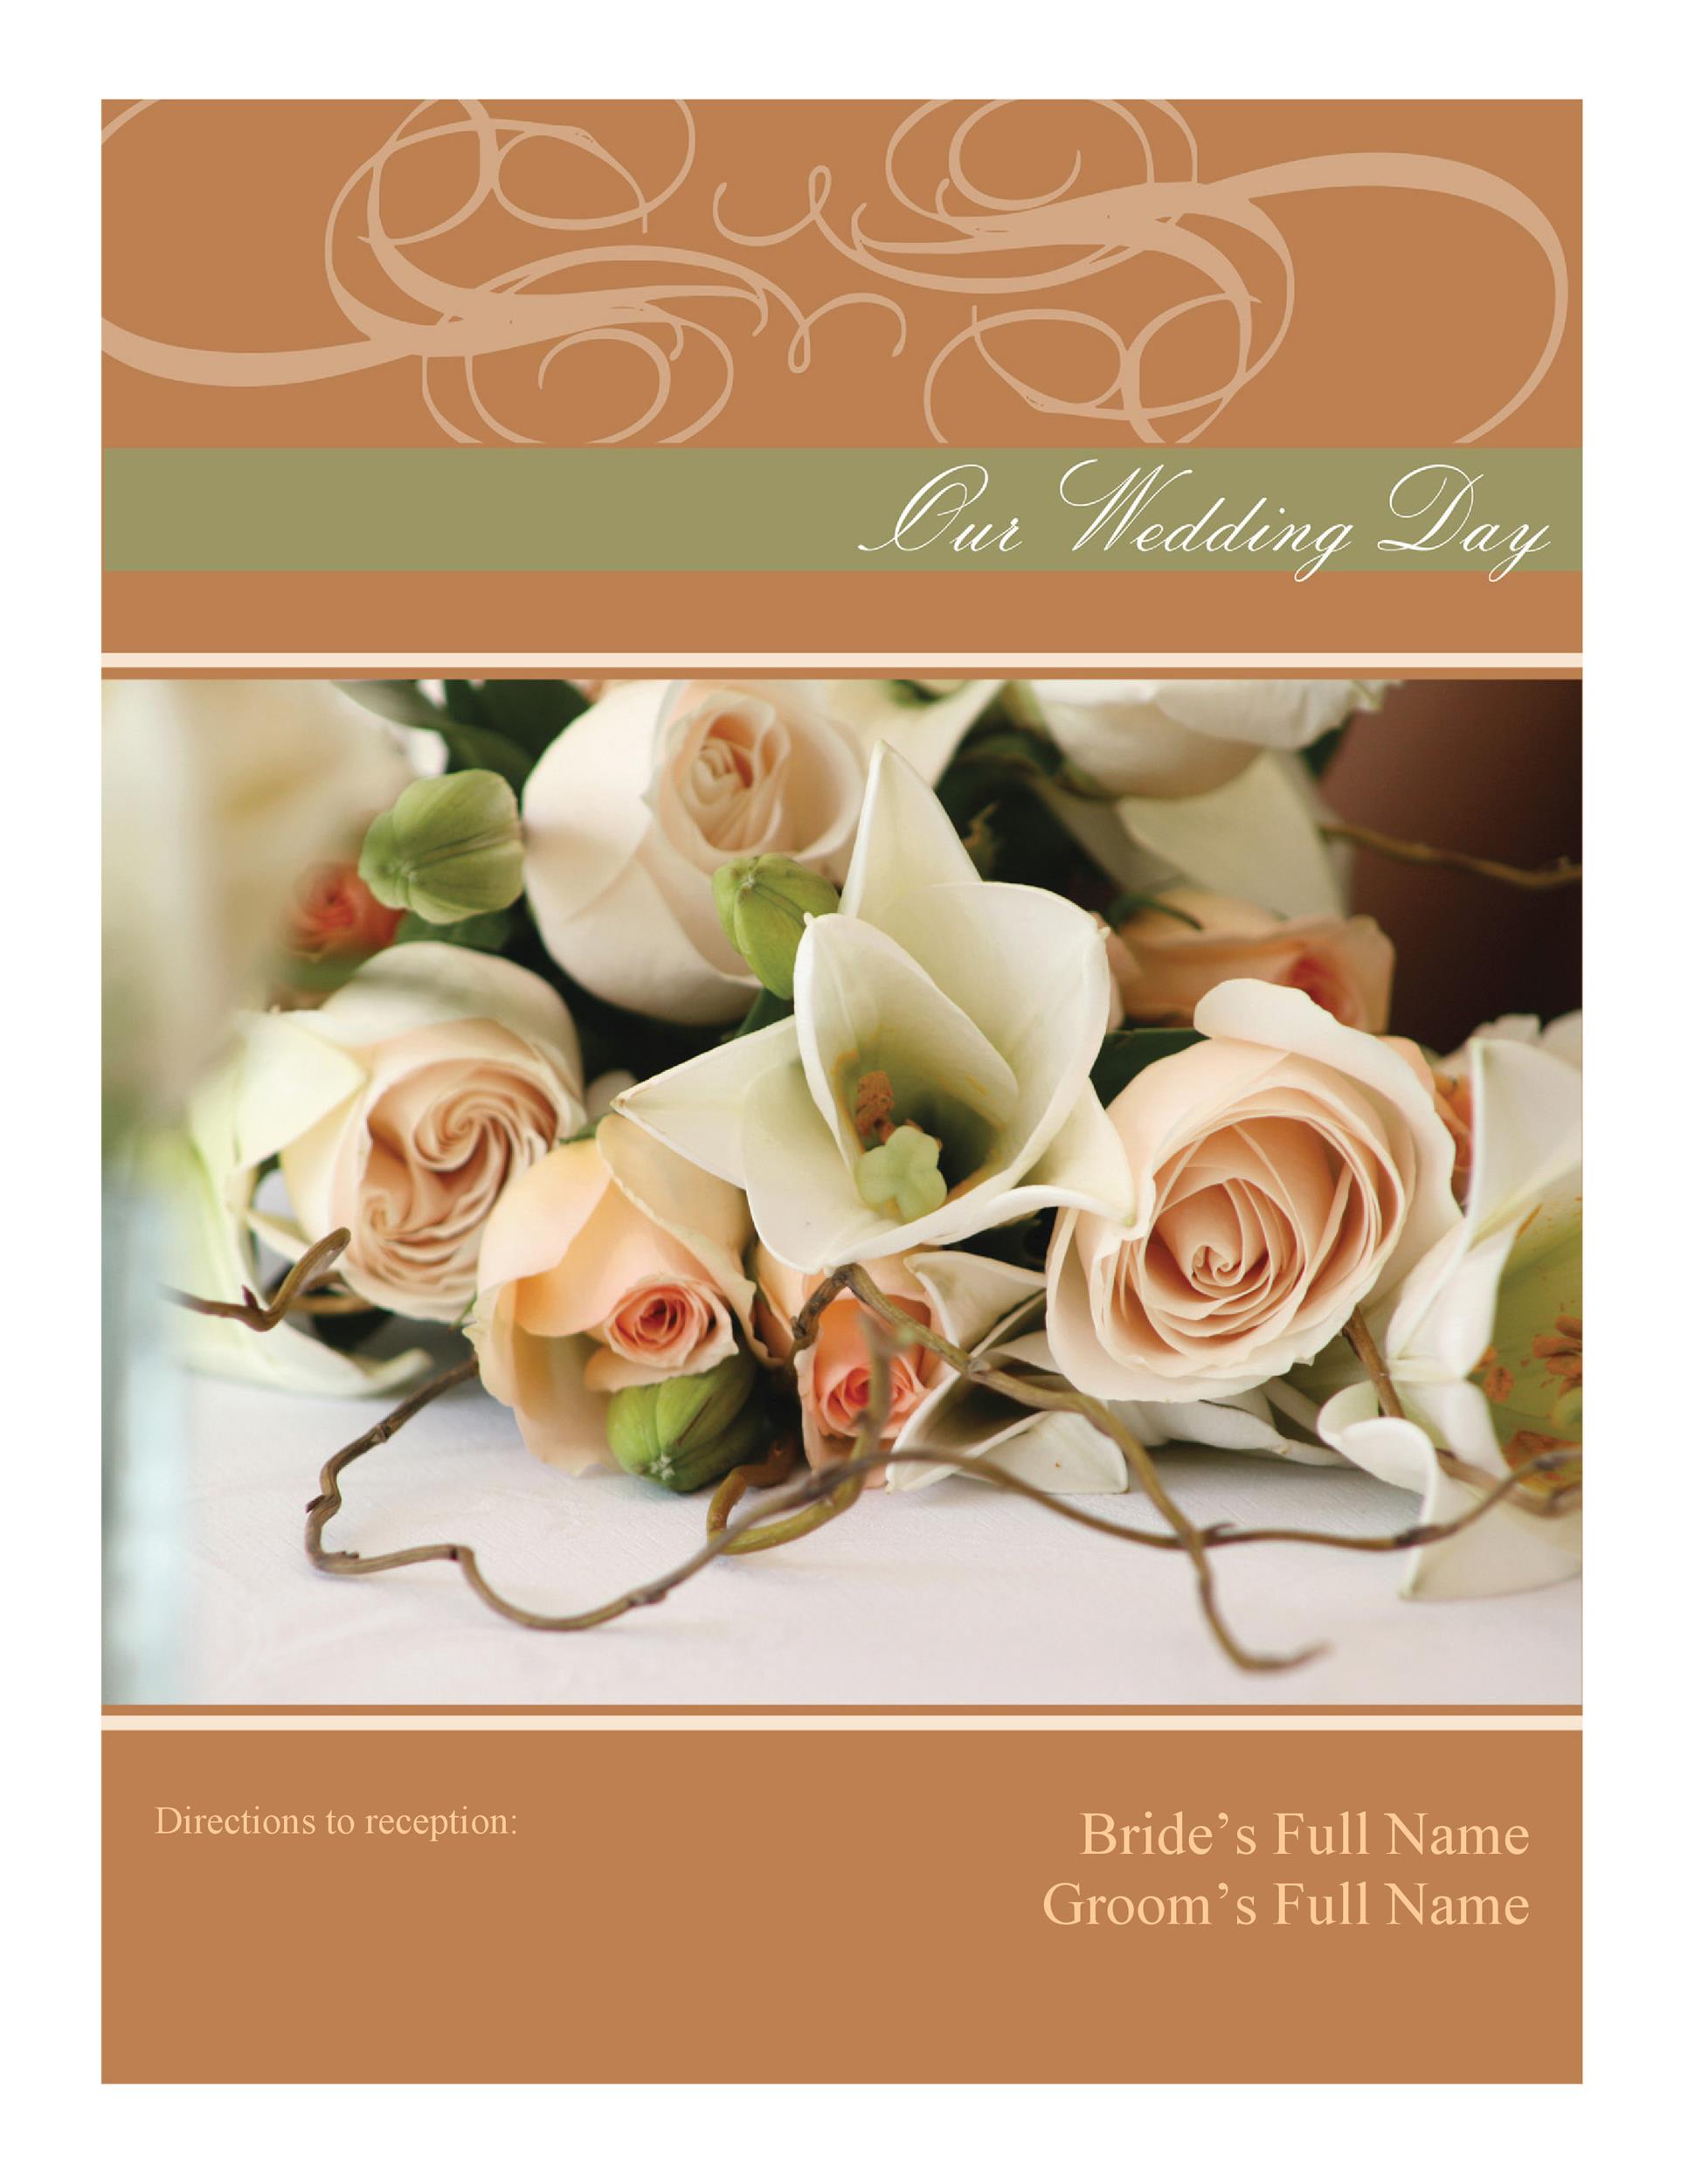 37 Printable Wedding Program Examples & Templates ᐅ TemplateLab